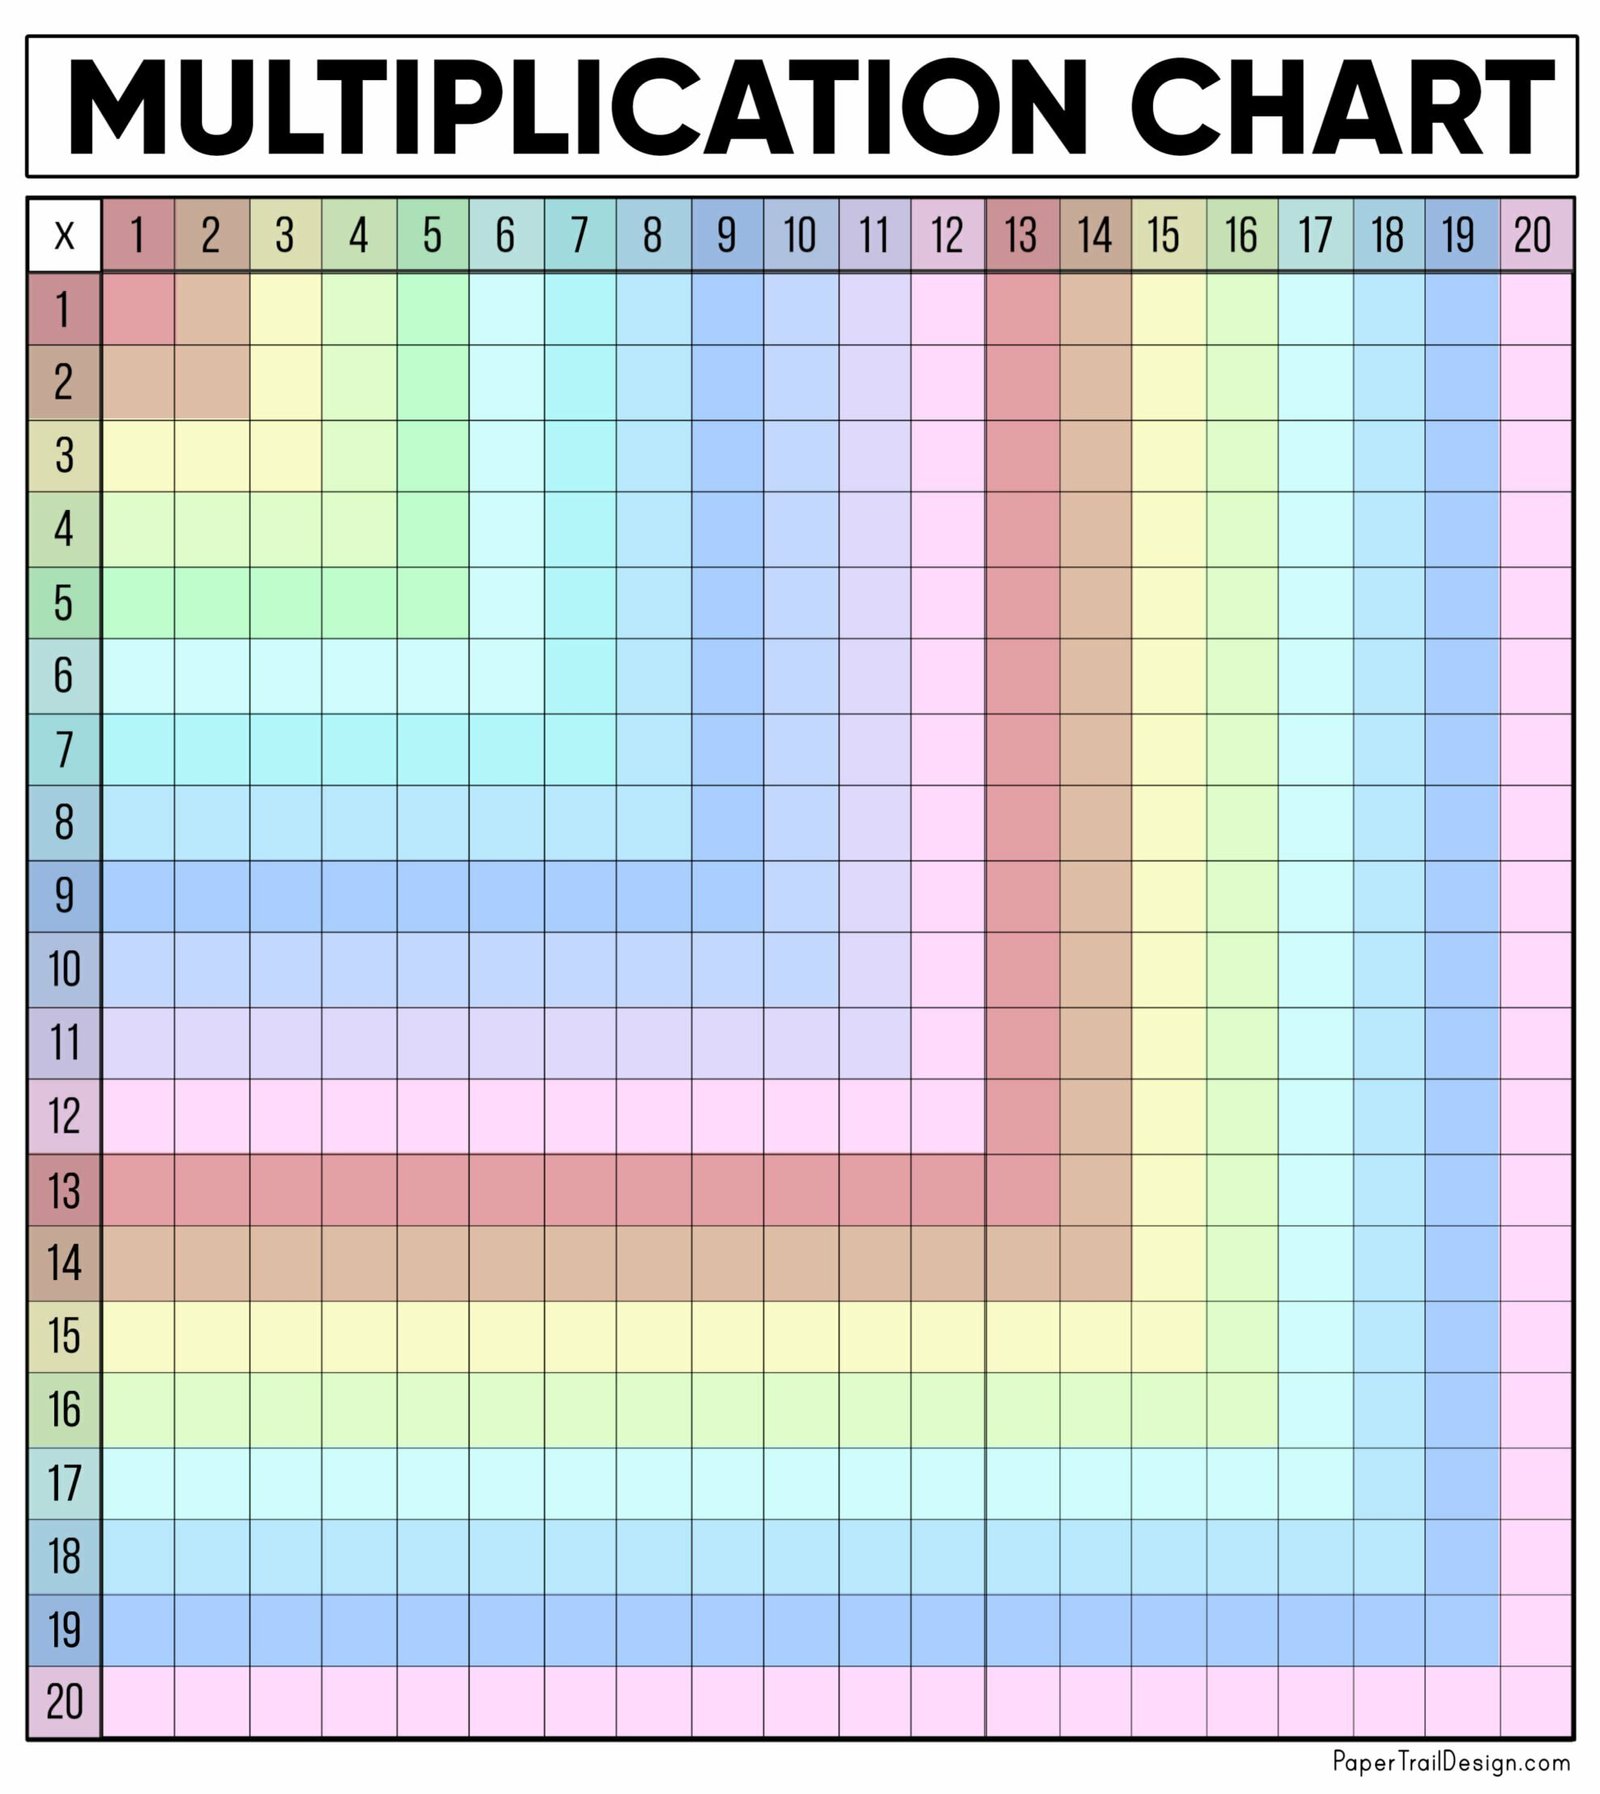 multiplication-table-1-20-printable-worksheetsr-worksheetscity